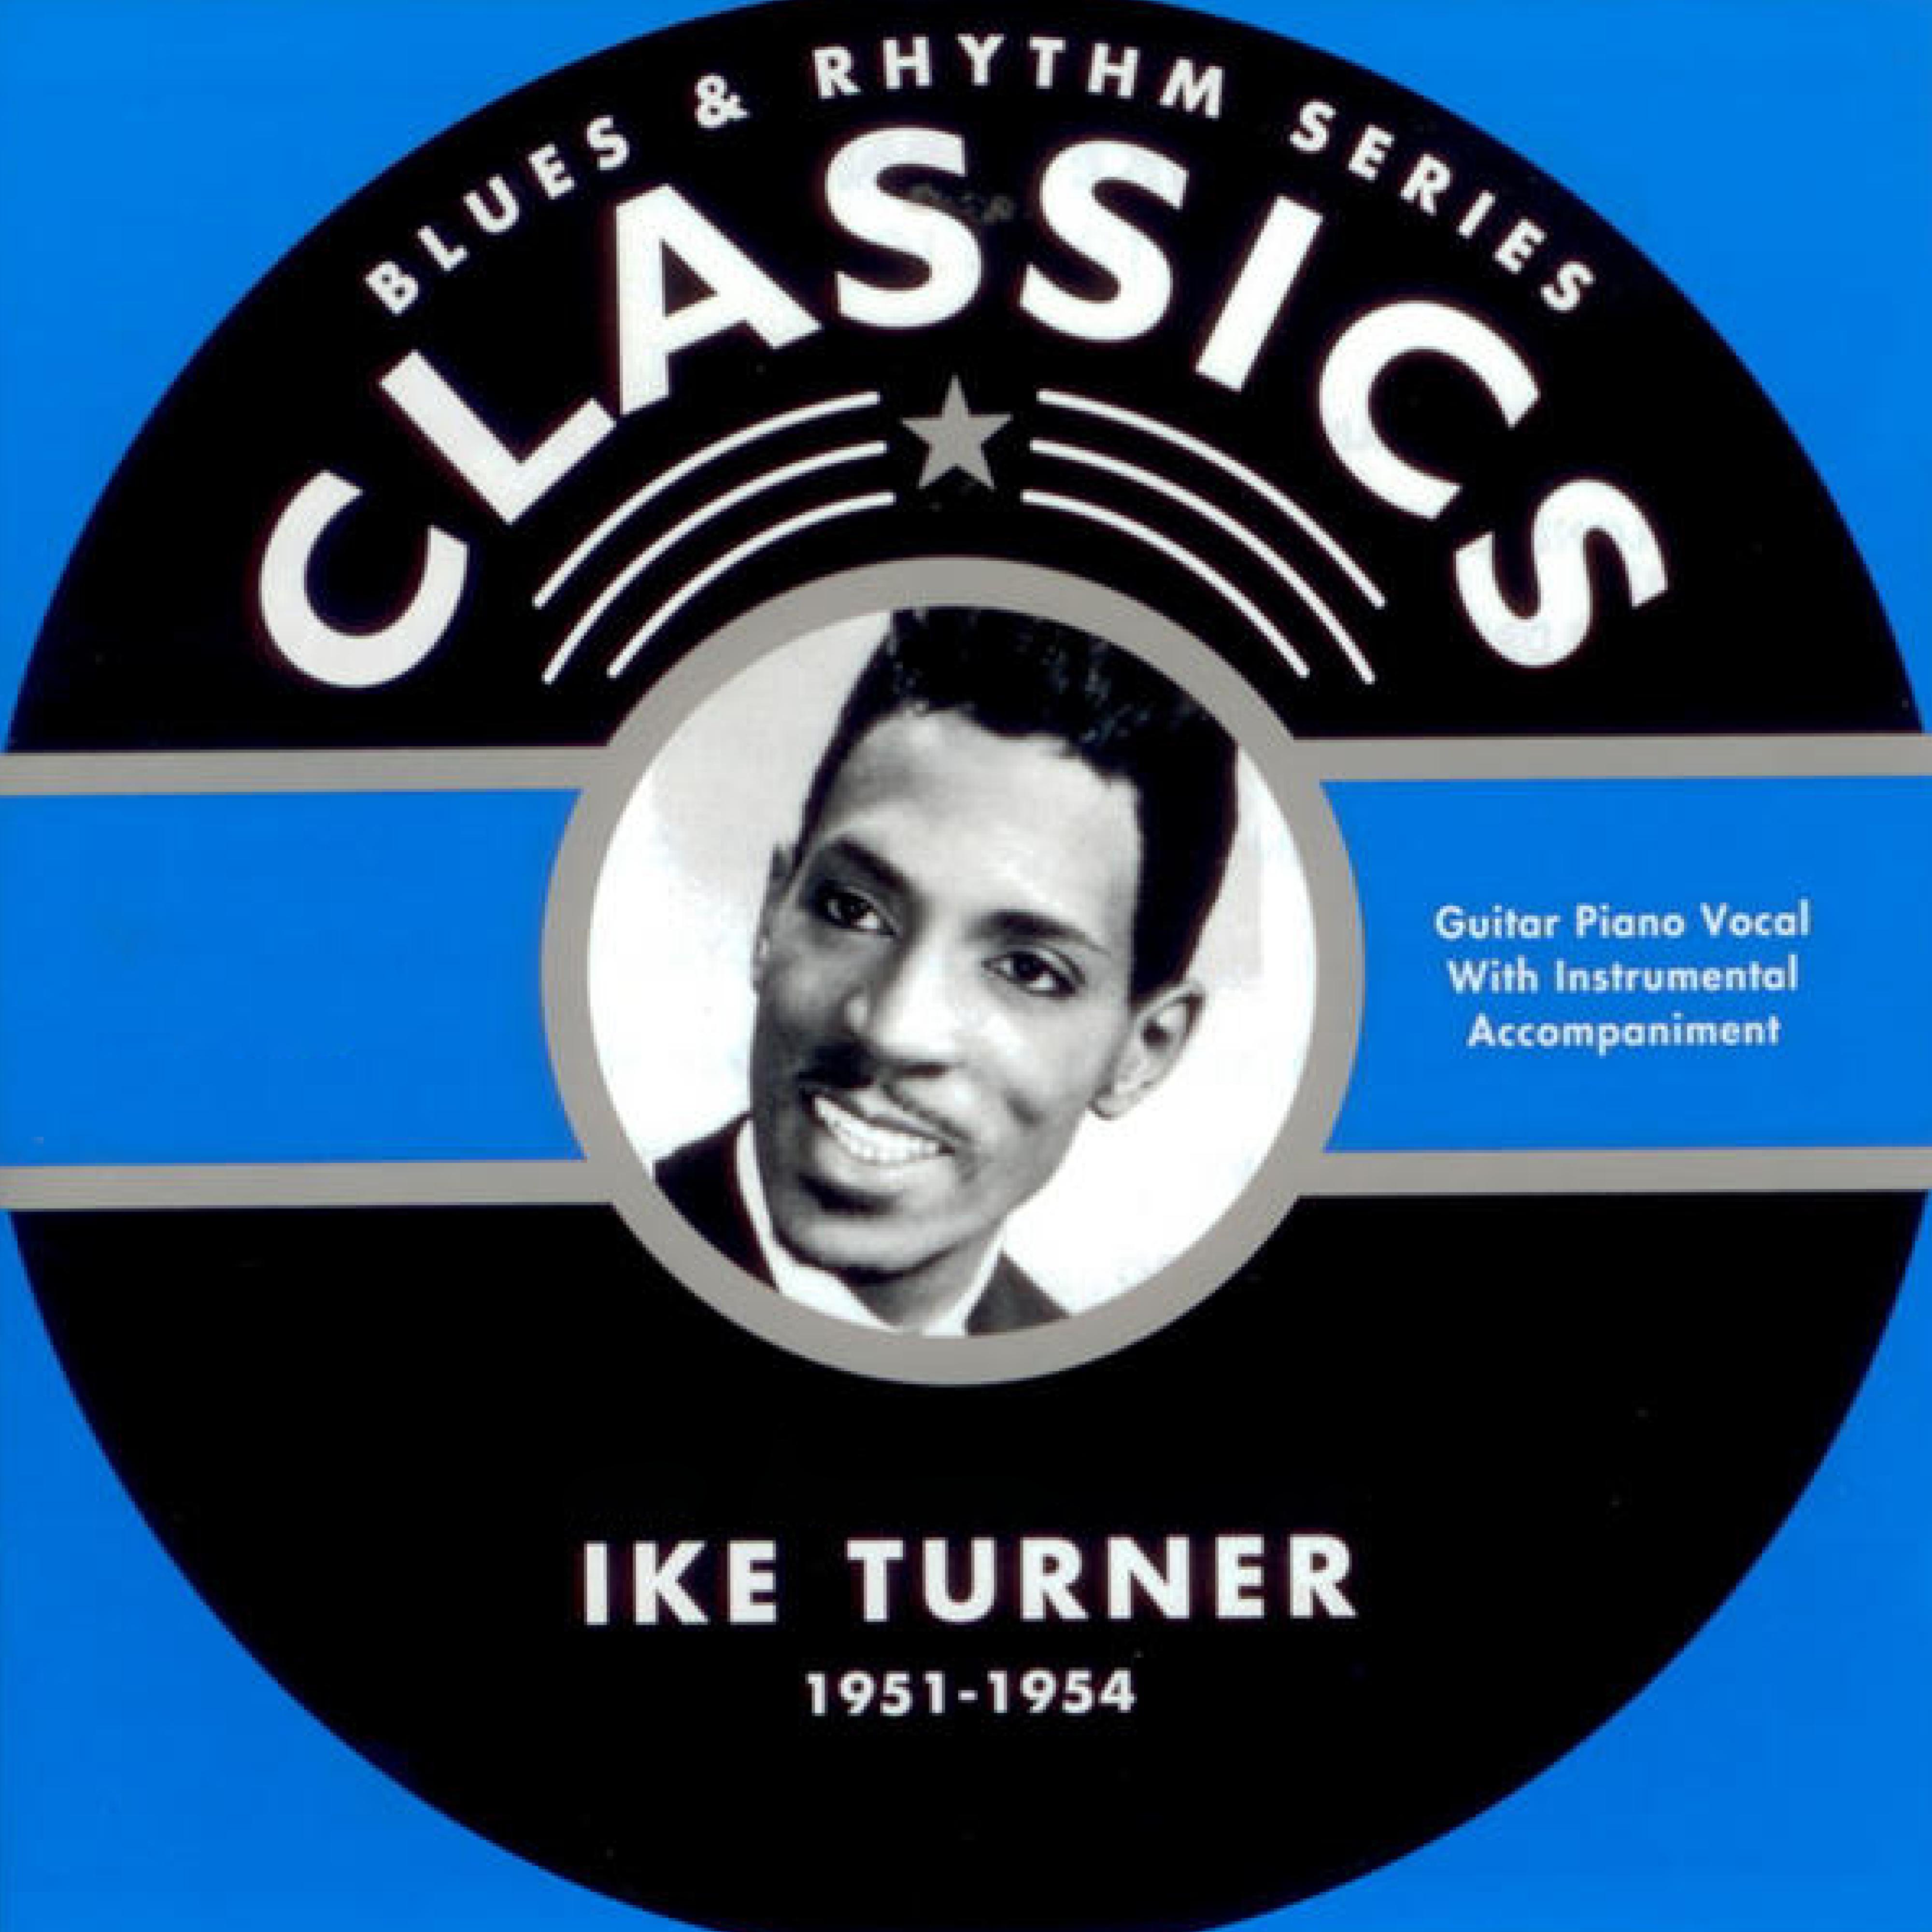 Blues & Rhythm Series Classics 1951-1954